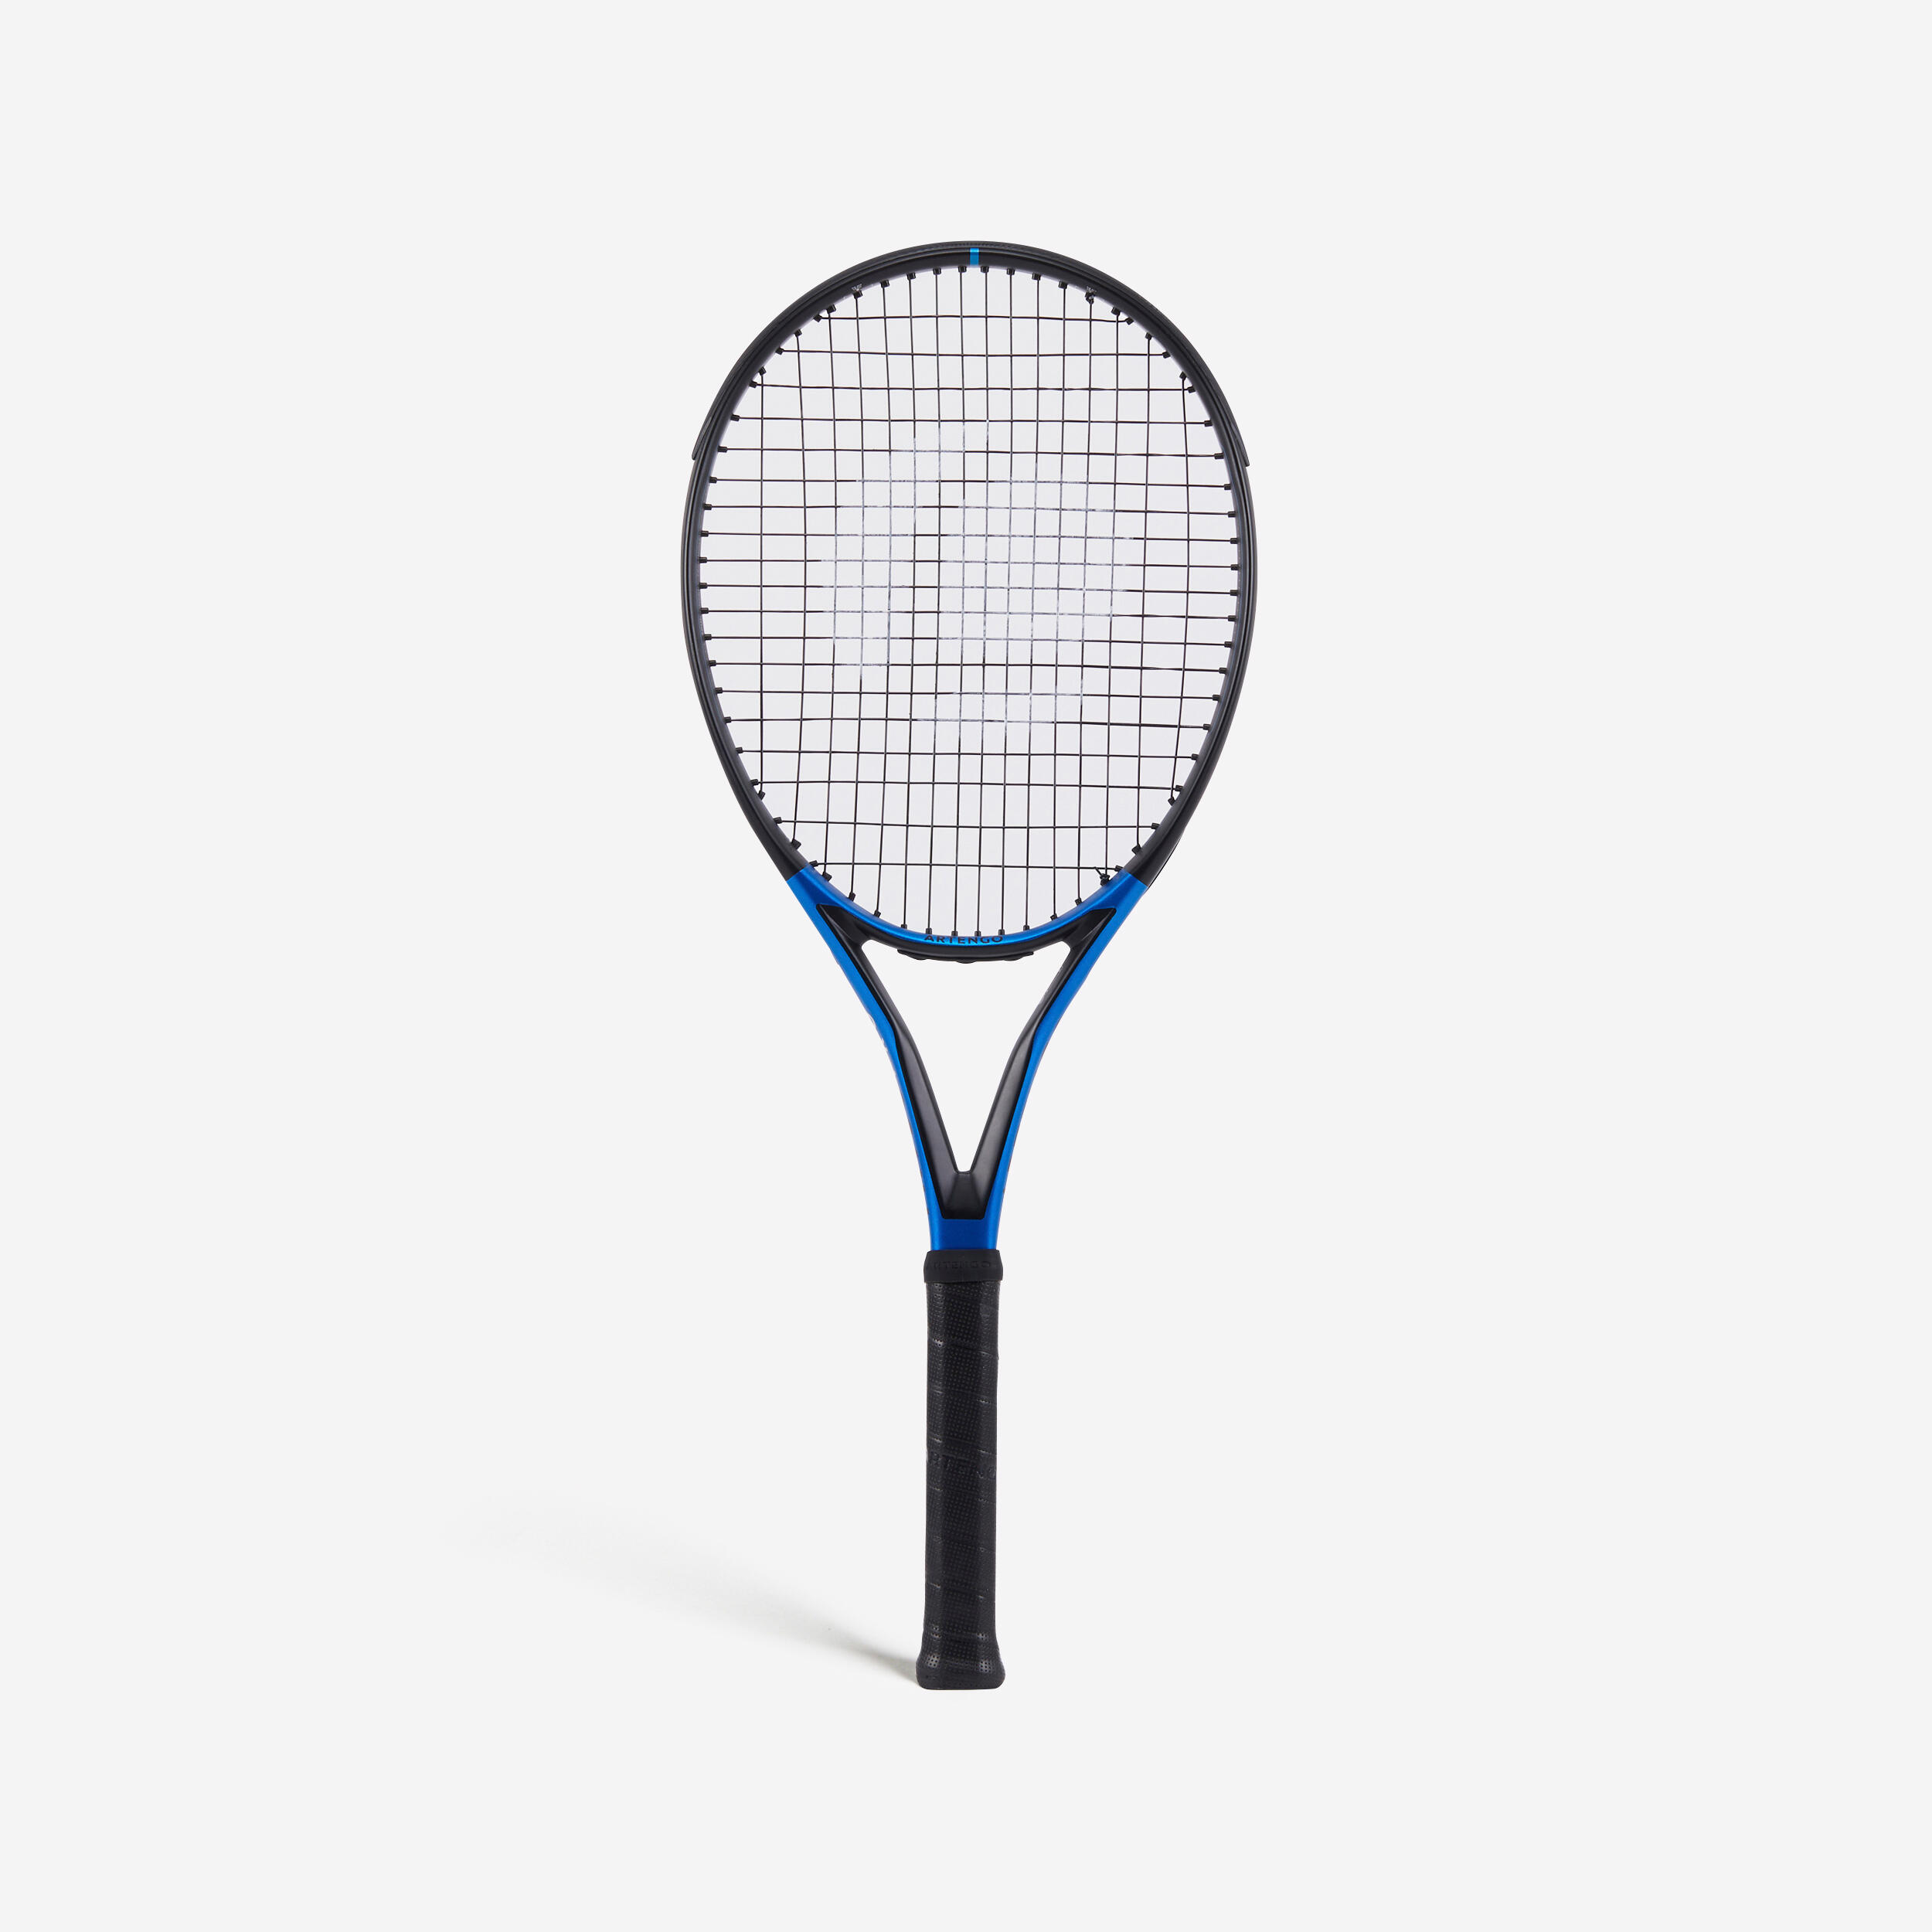 ARTENGO Raquette De Tennis Adulte - Artengo Tr930 Spin Pro Noir Bleu 300g